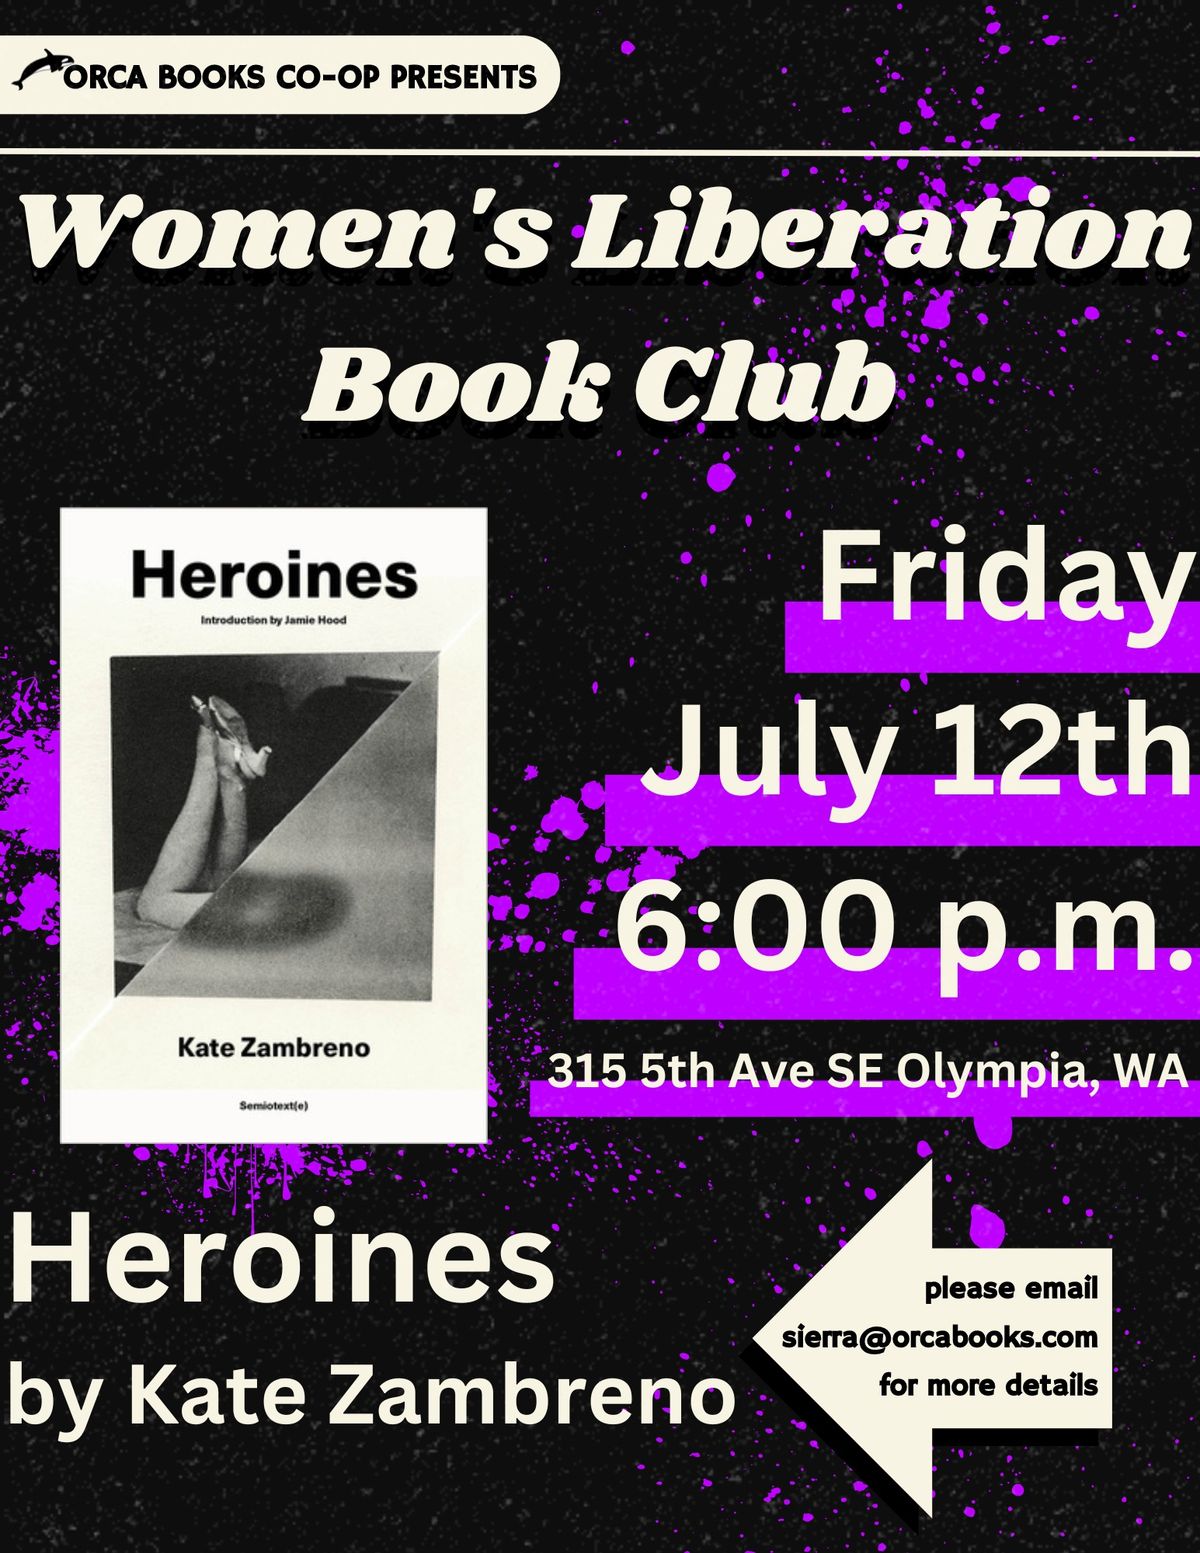 Women's Liberation Book Club- Heroines by Kate Zambreno